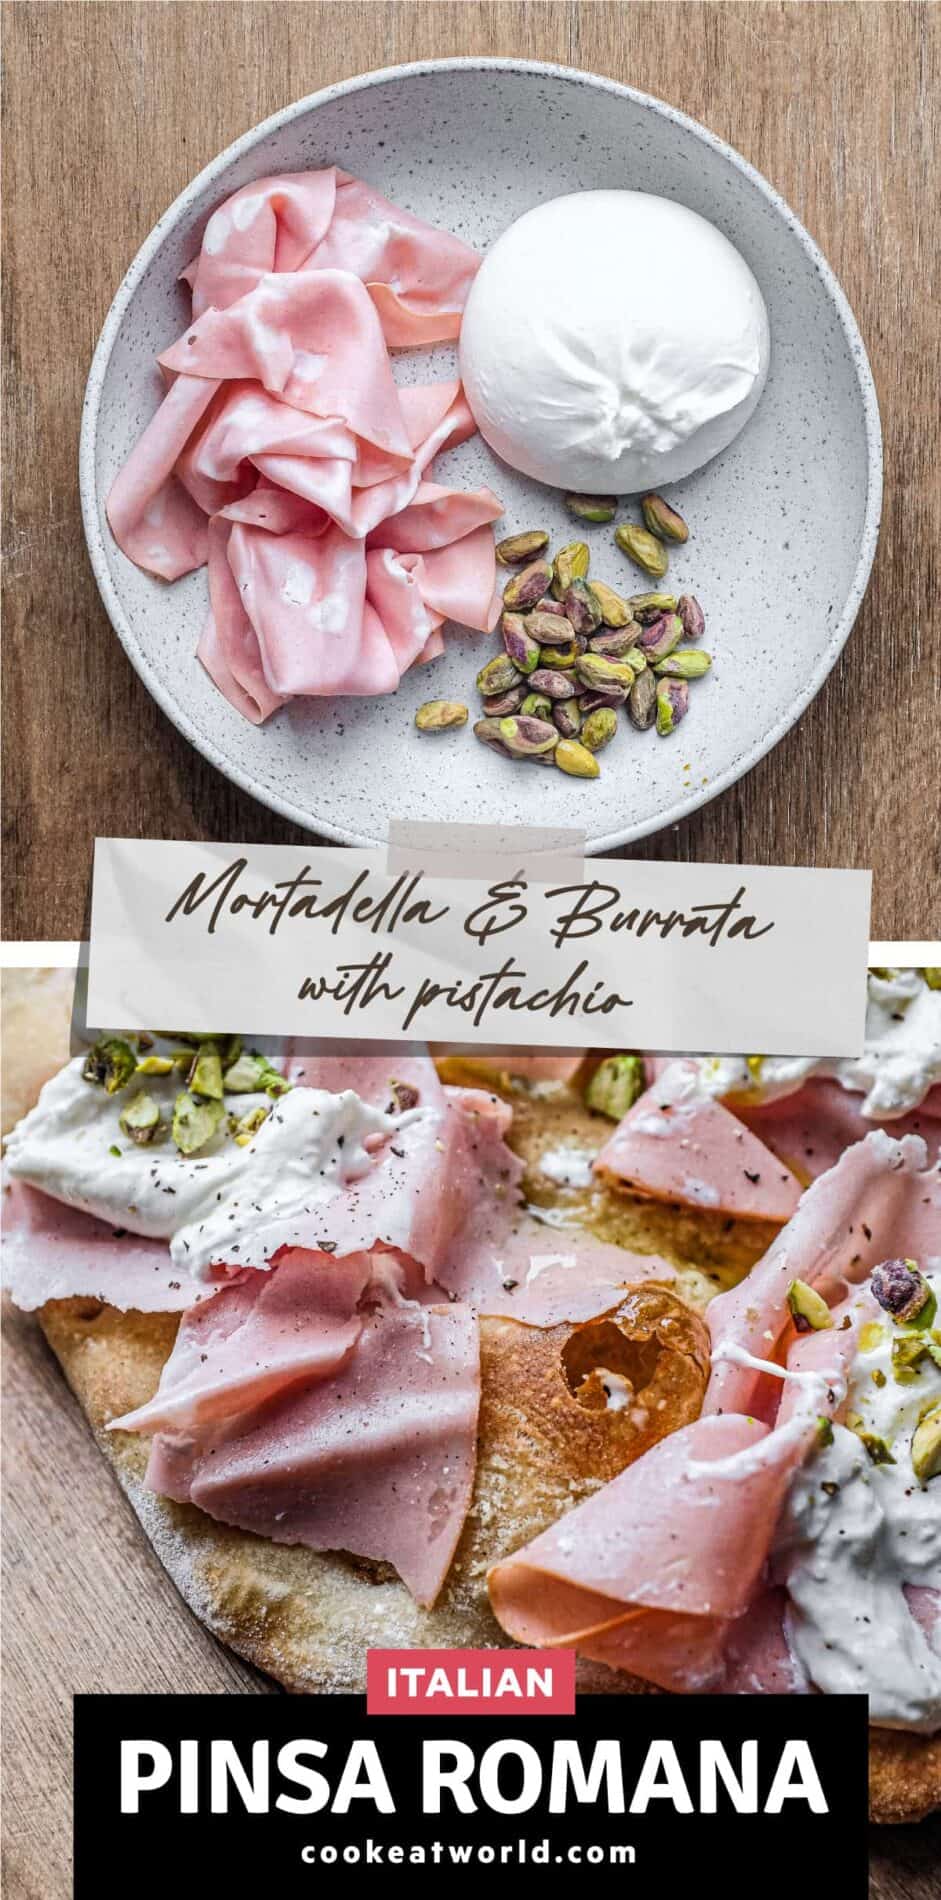 Top picture: a bowl of mortadella ham, burrata and pistachio nuts. Bottom picture: A pinsa with Mortadella, burrata and chopped pistachio.